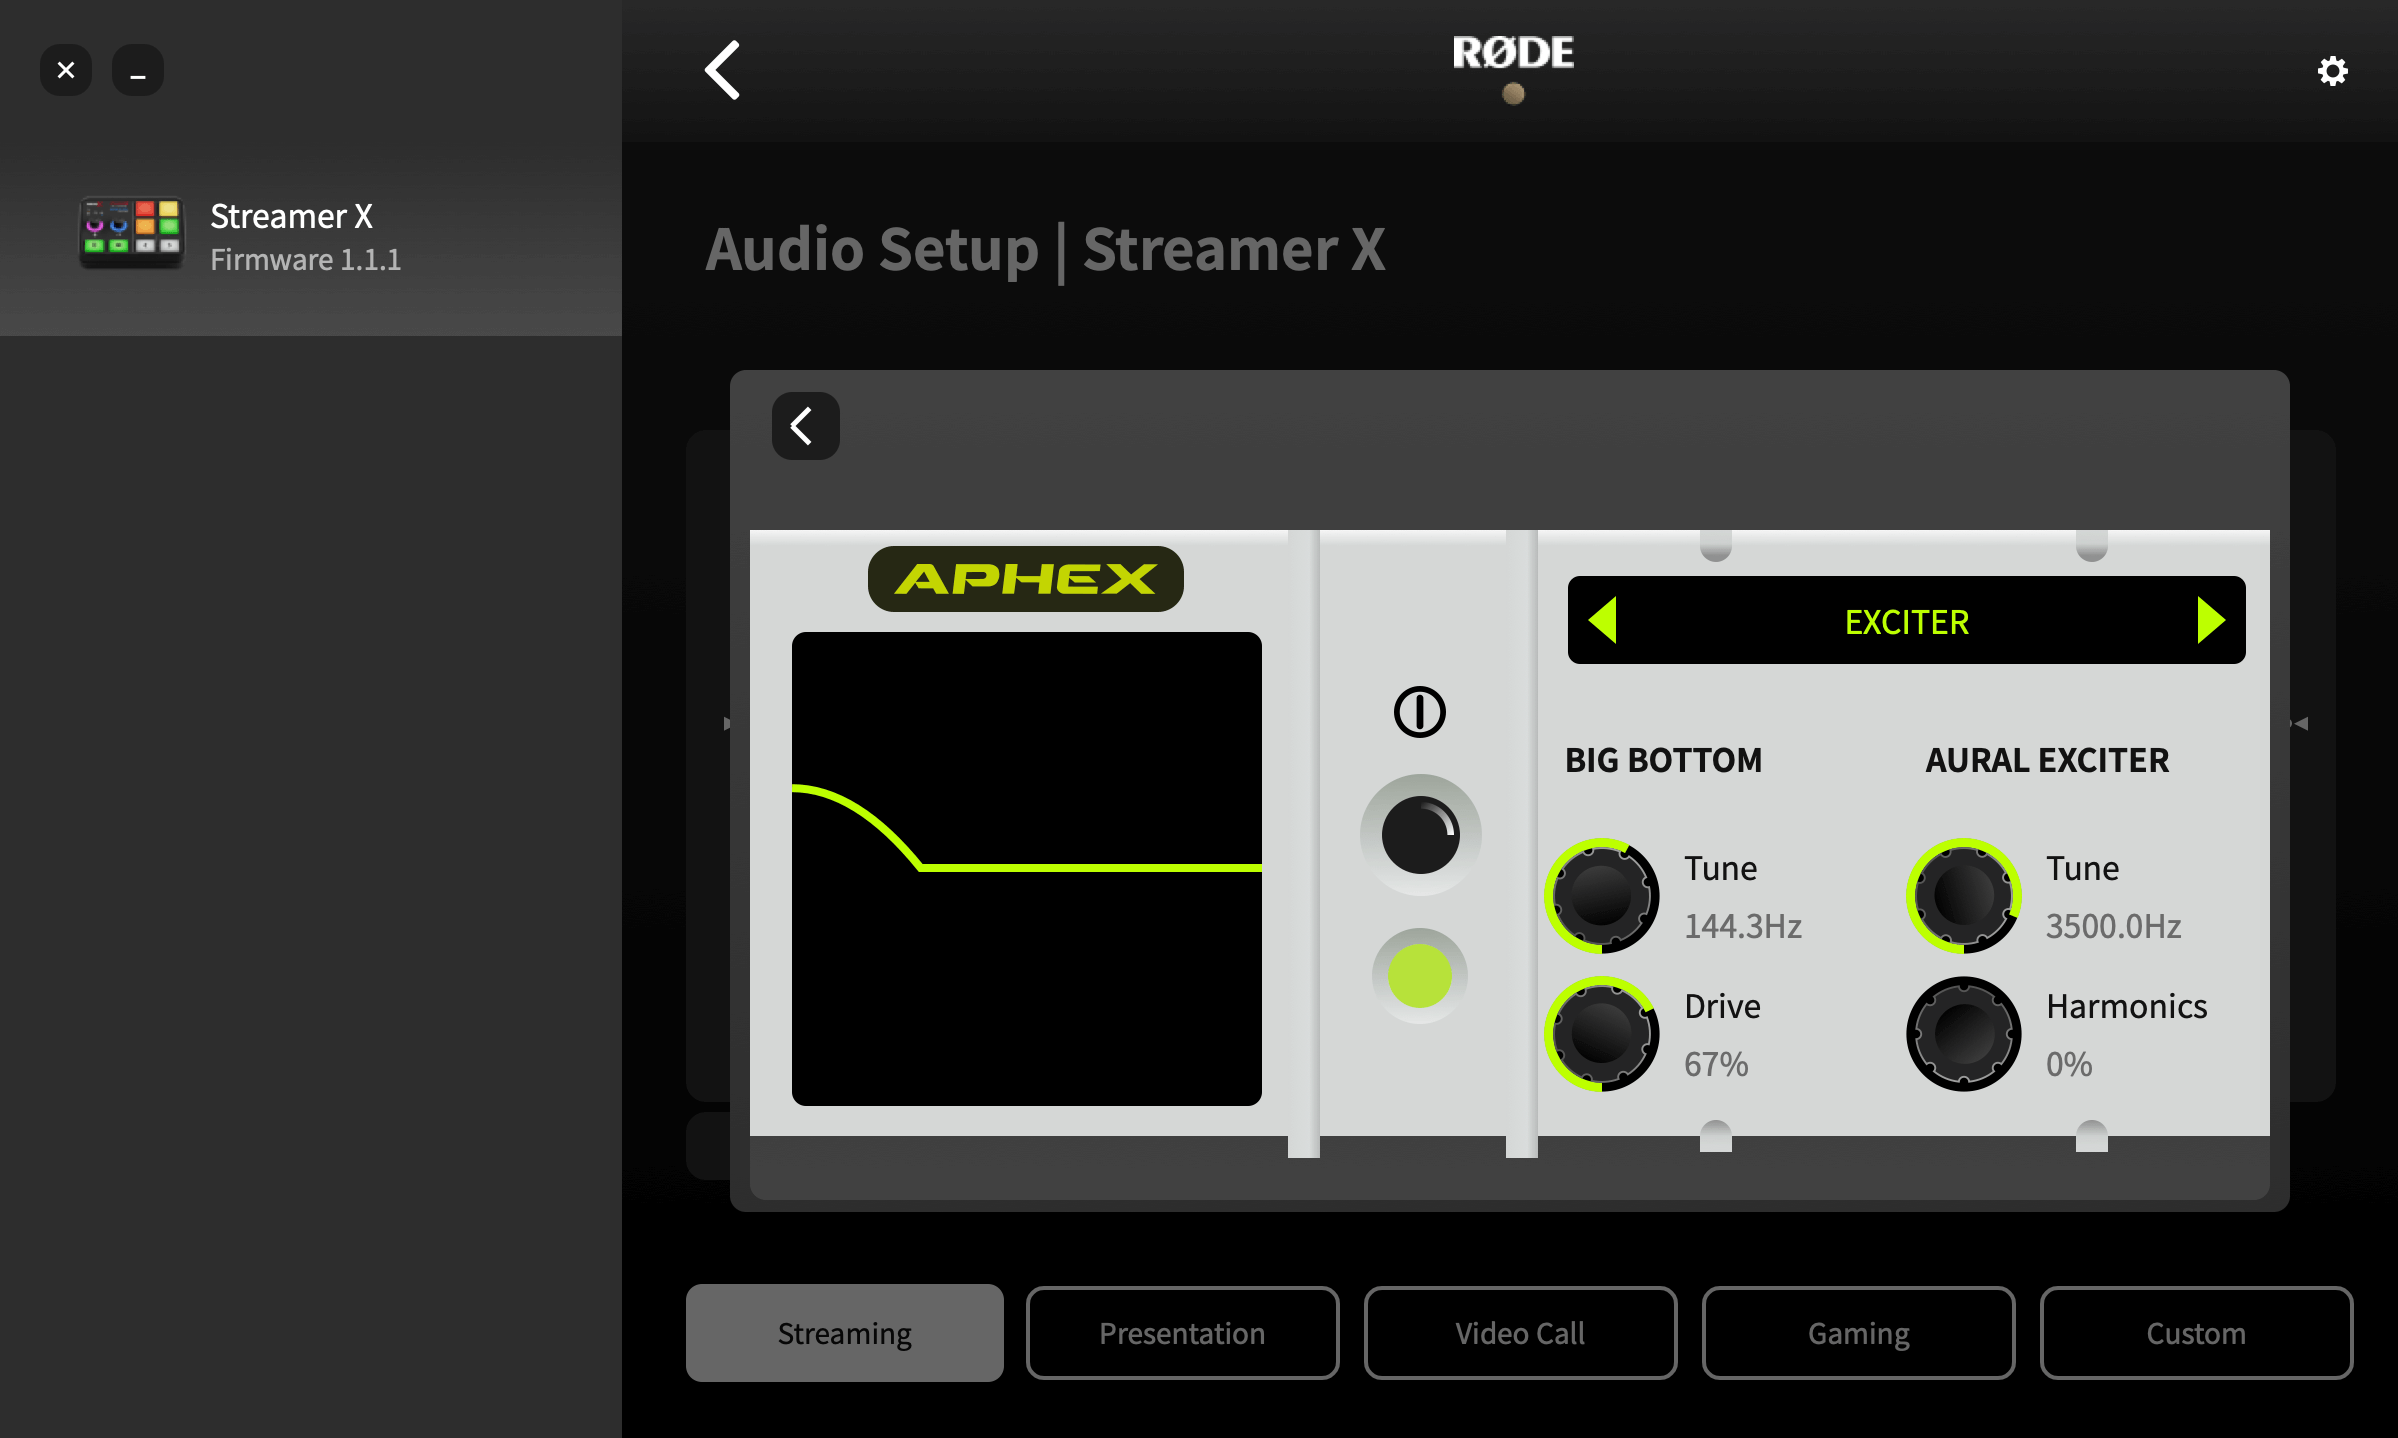 RØDE Central showing Streamer X big bottom settings